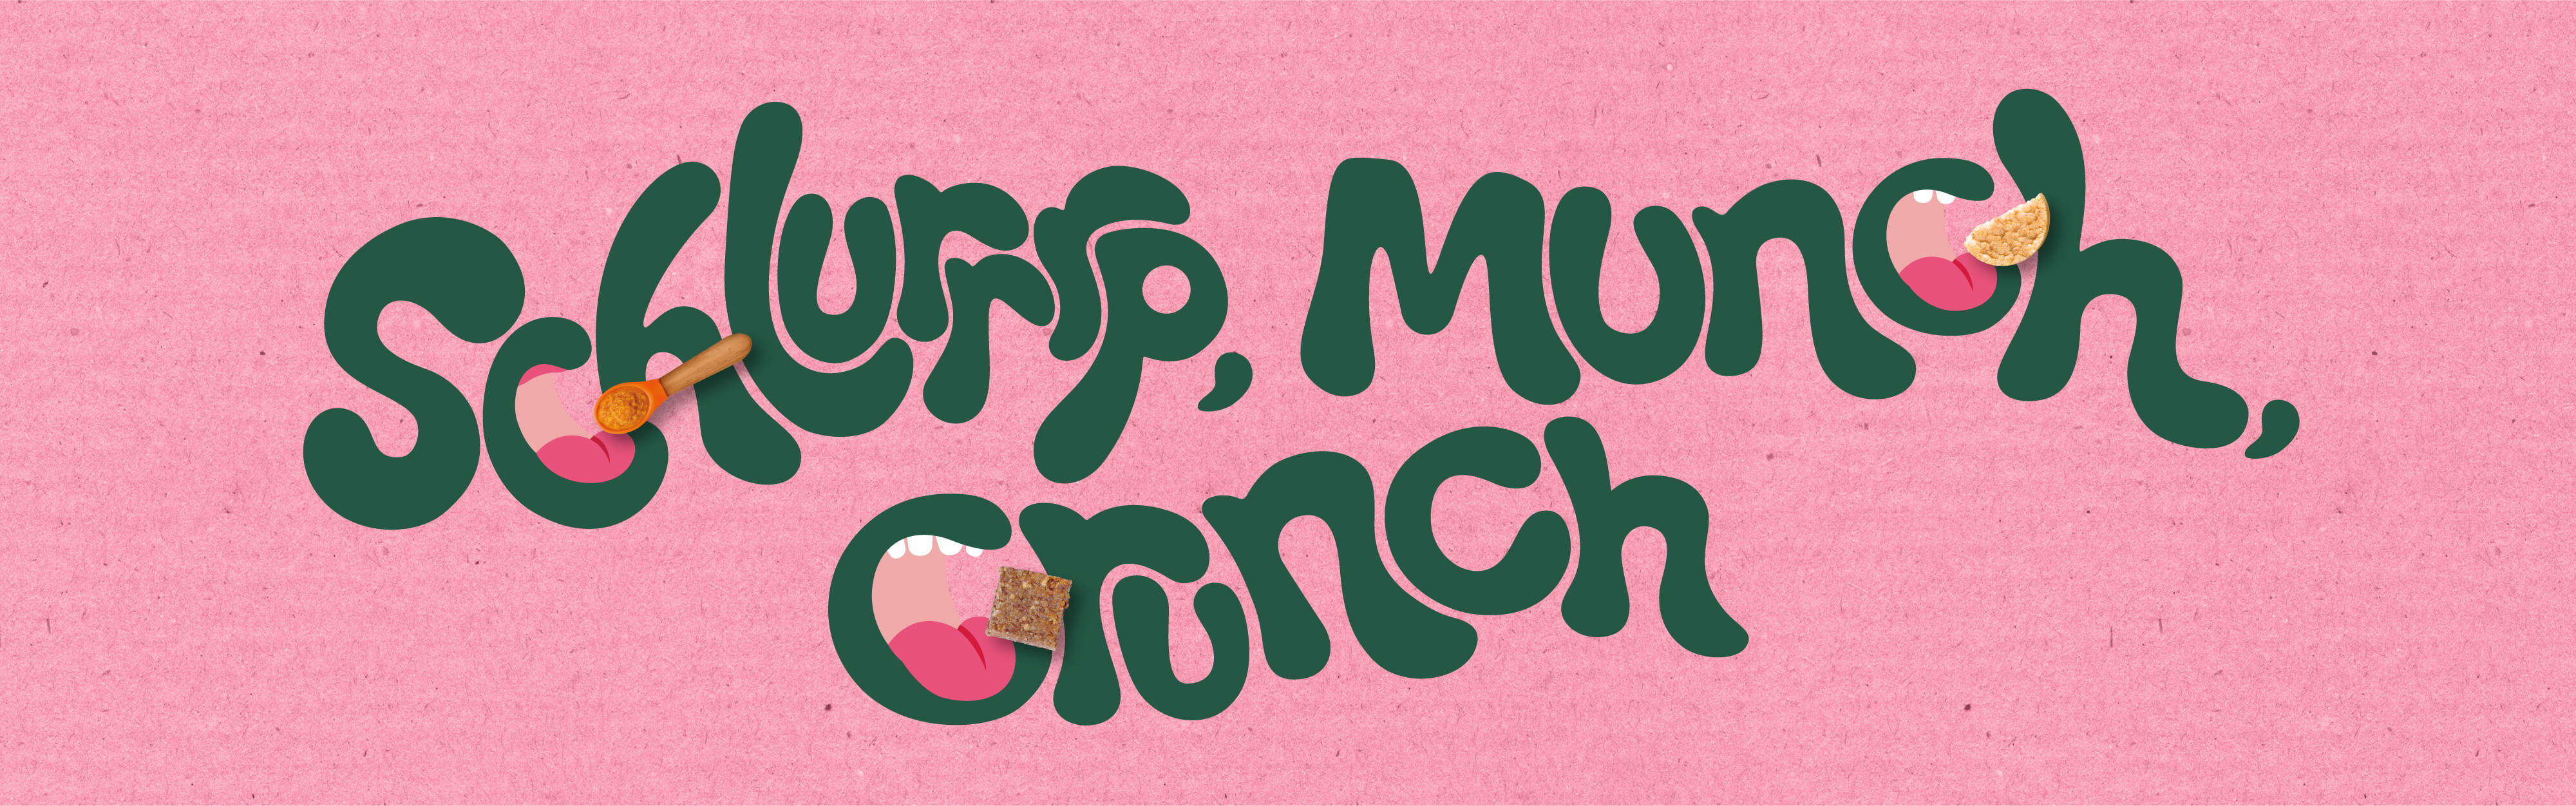 Organix green text that says "schlurrrp, munch, crunch" on a pink background